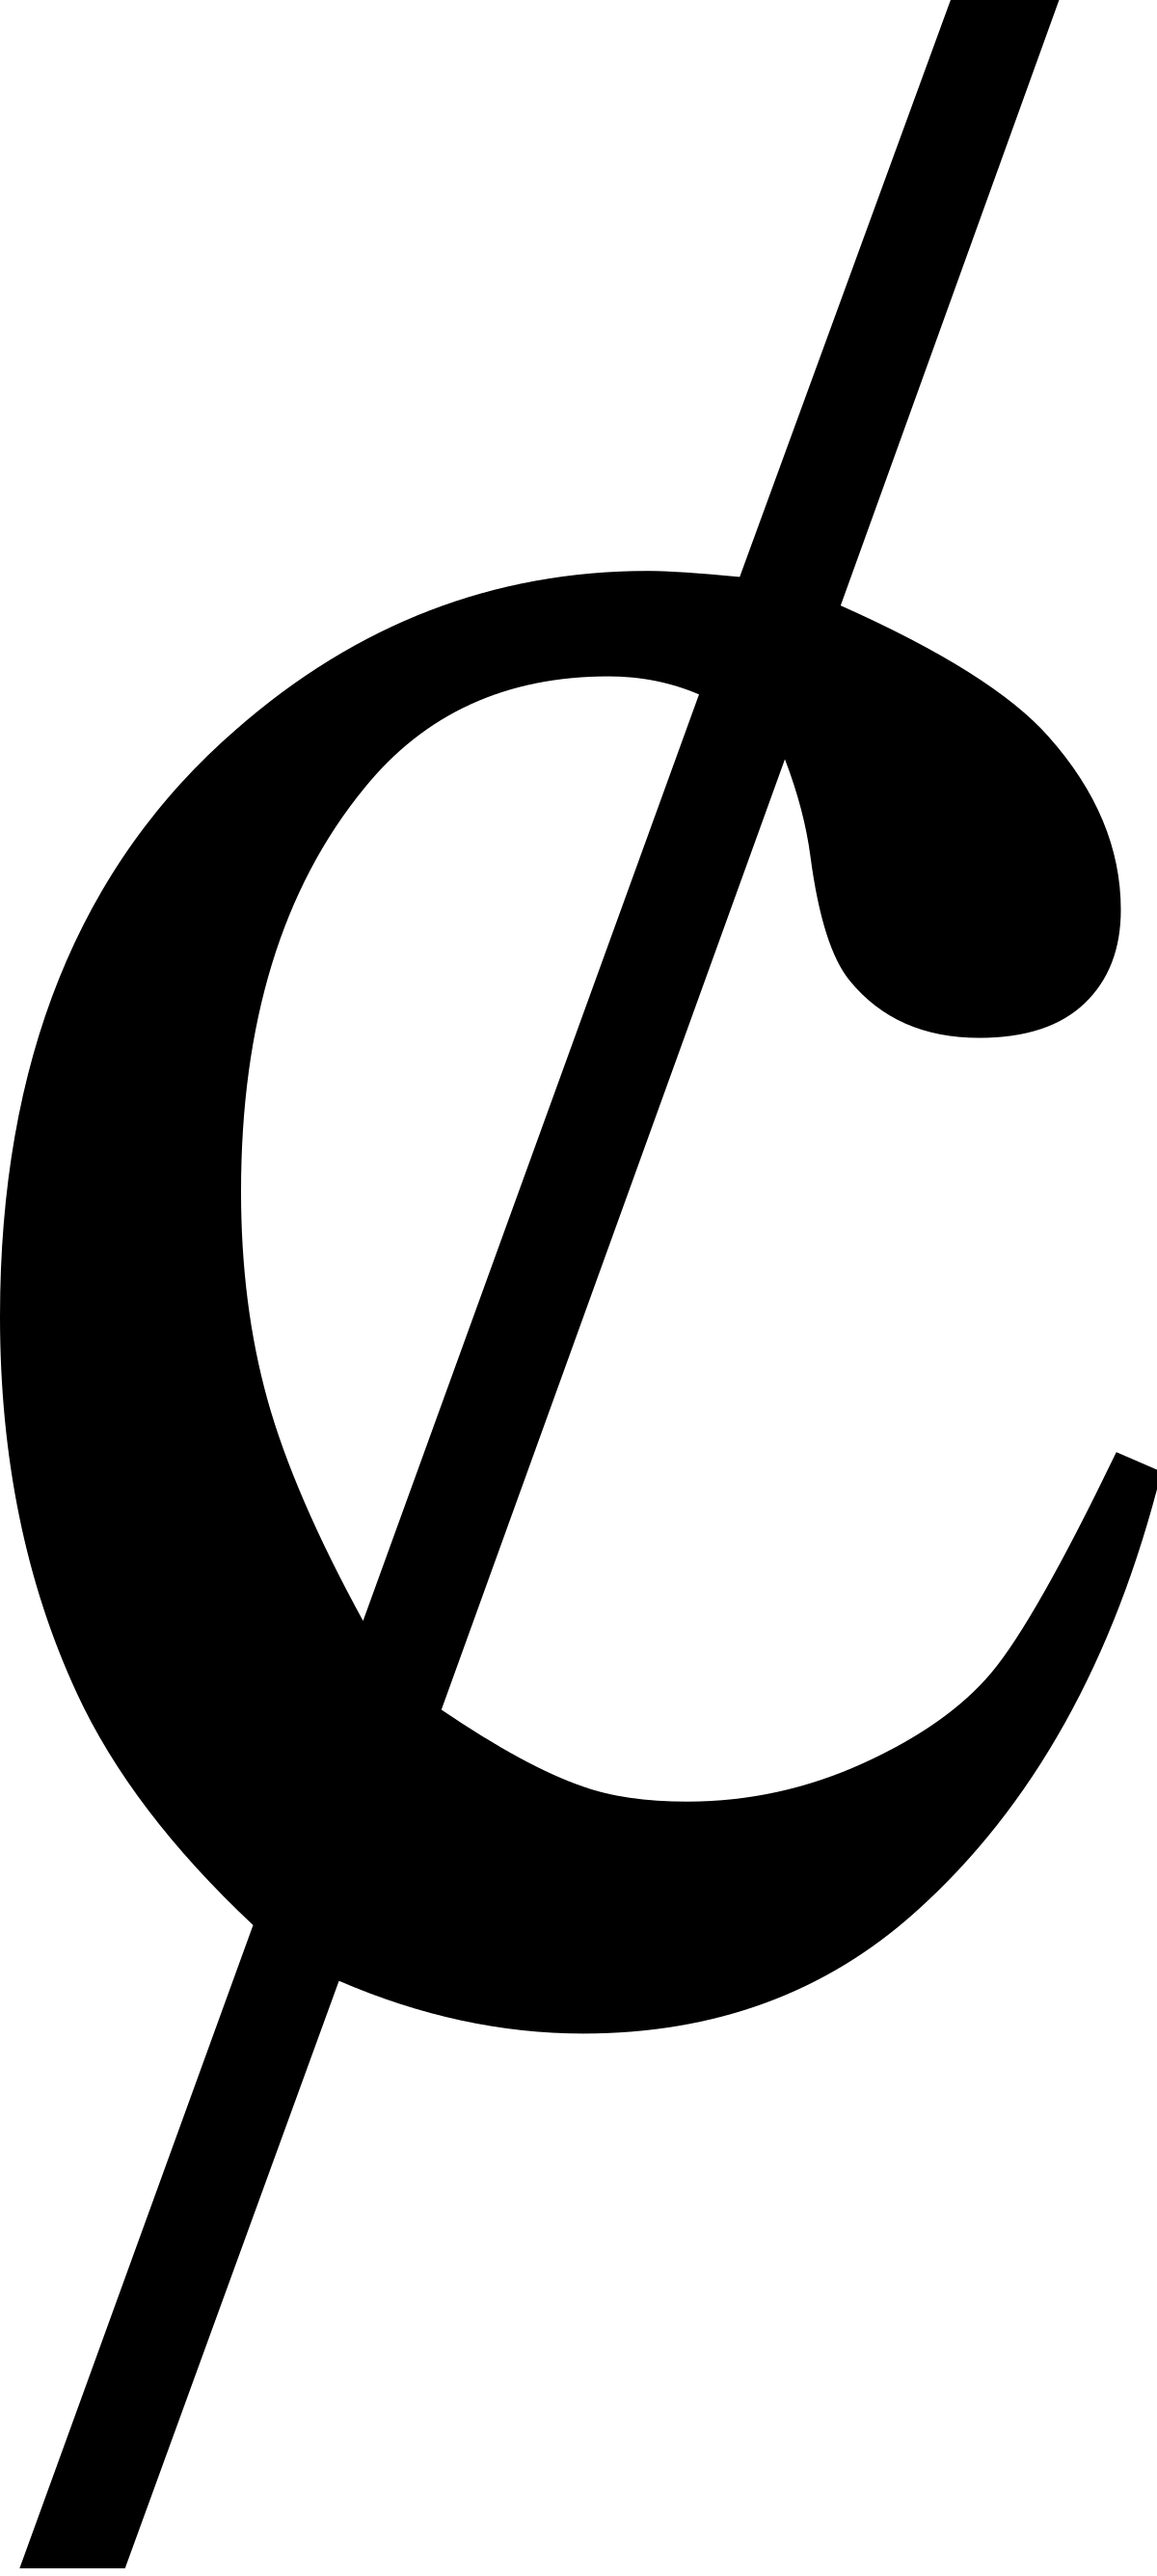 Cent Symbol SVG